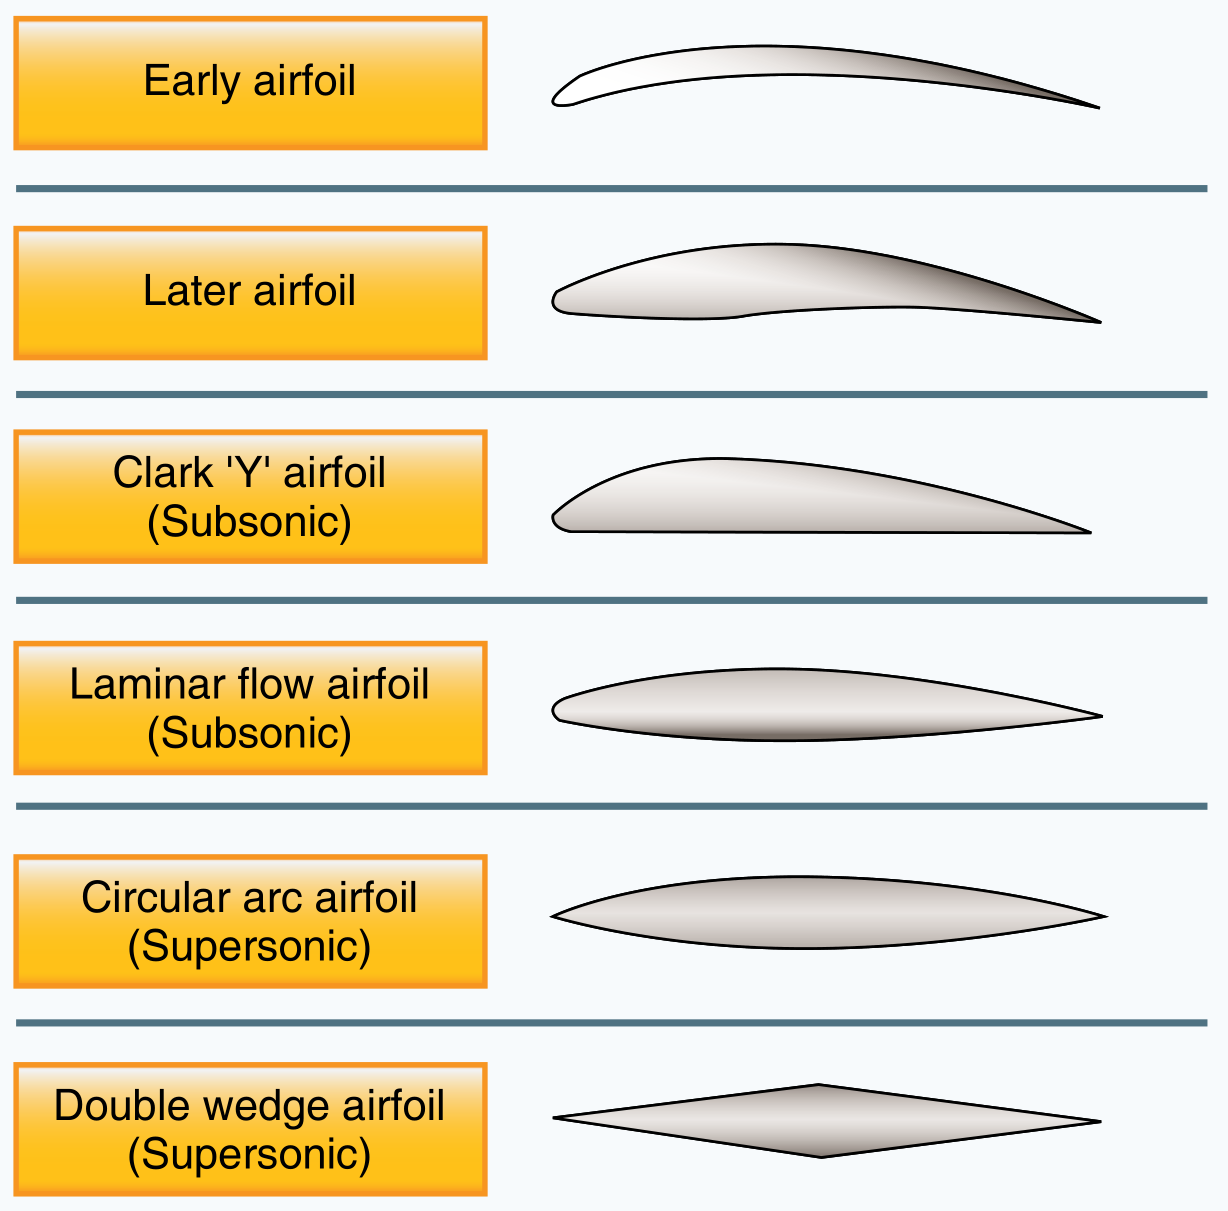 Airfoil designs.